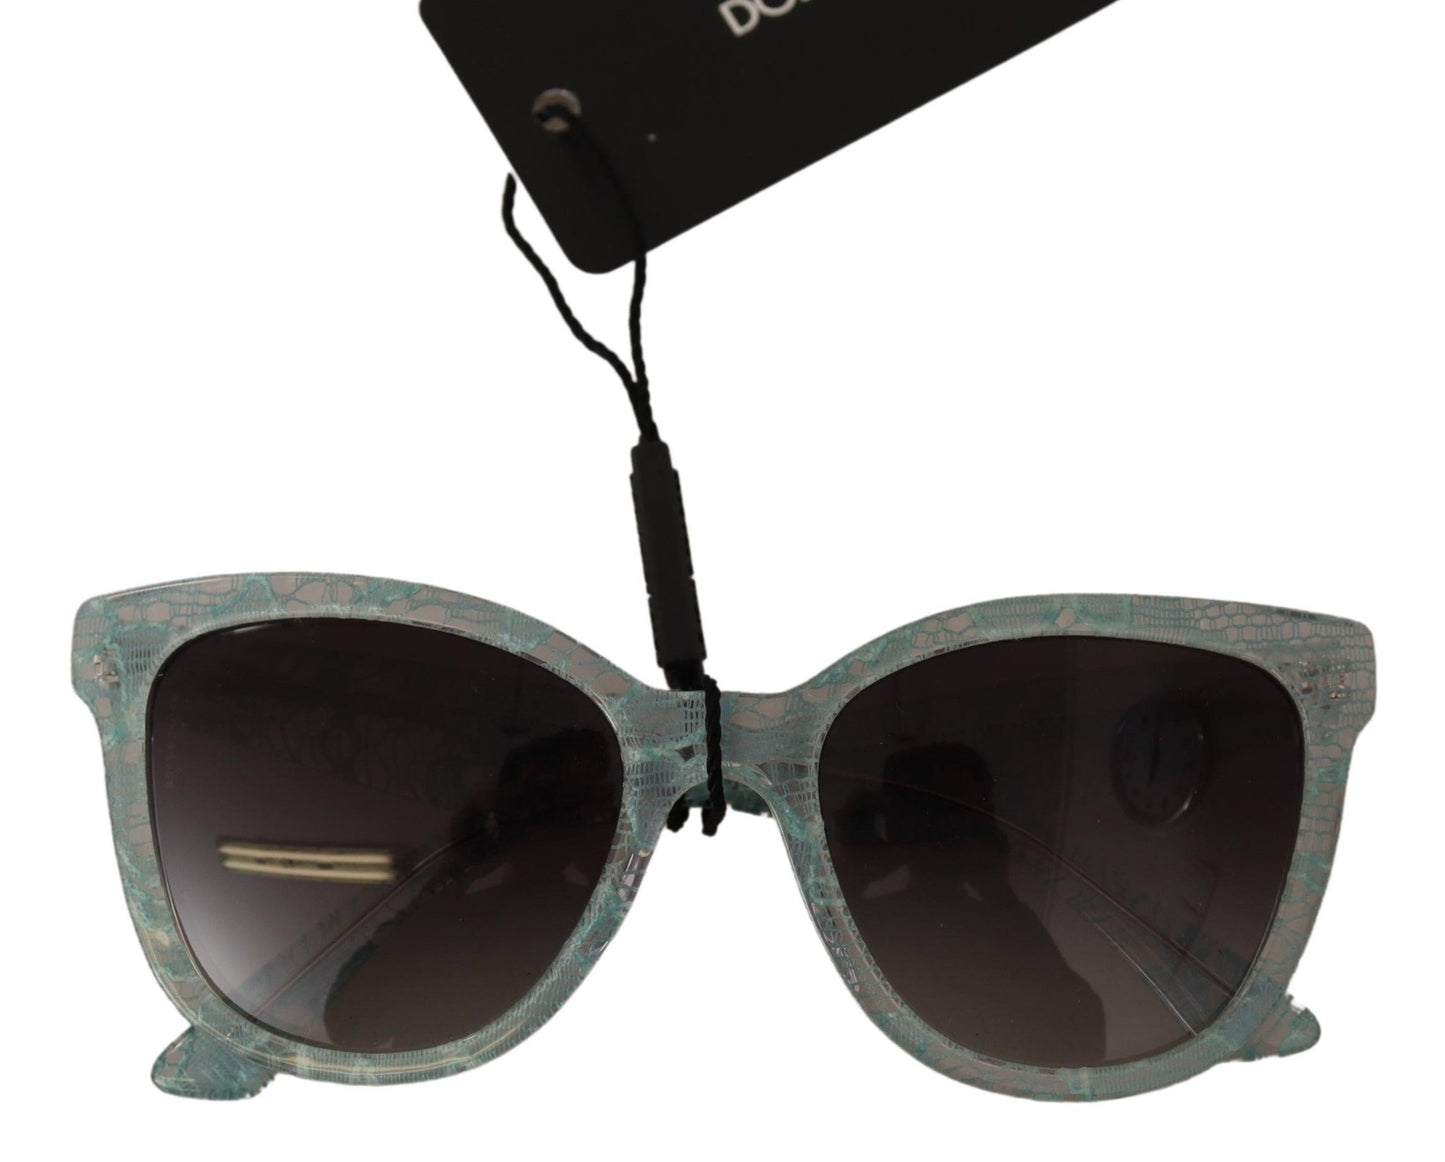 Dolce & Gabbana Blue Crystal Acetate Crystal Acetato DG4190 occhiali da sole